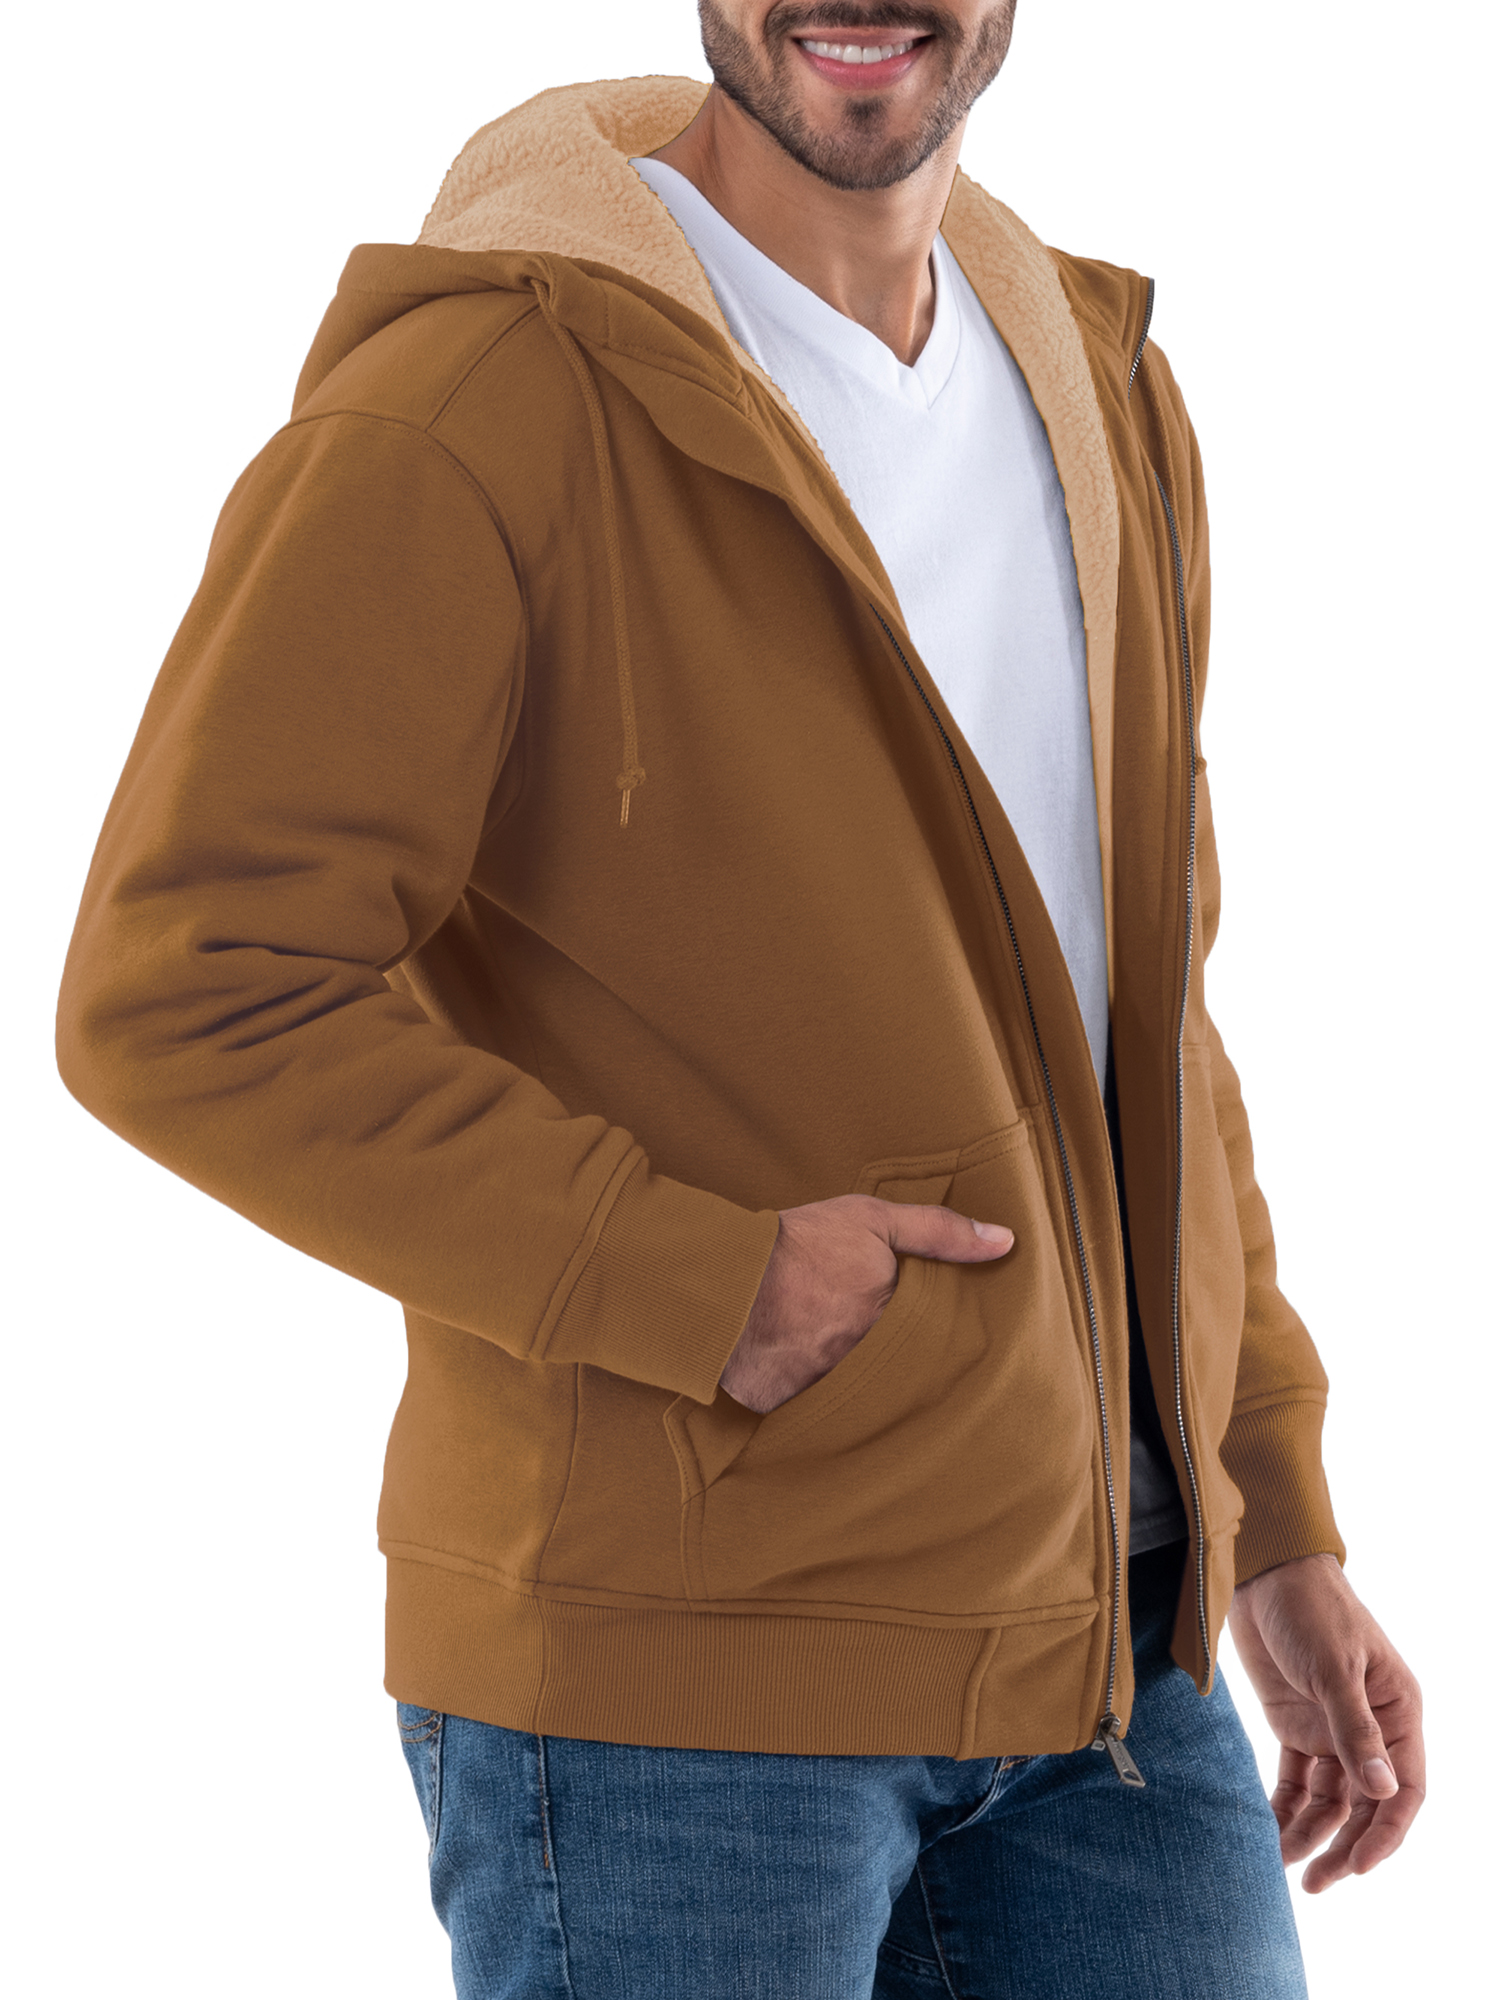 Wrangler Workwear Men's & Big Men's Full Zip Sherpa Lined Hooded Sweatshirt, Sizes S-5XL - image 4 of 8